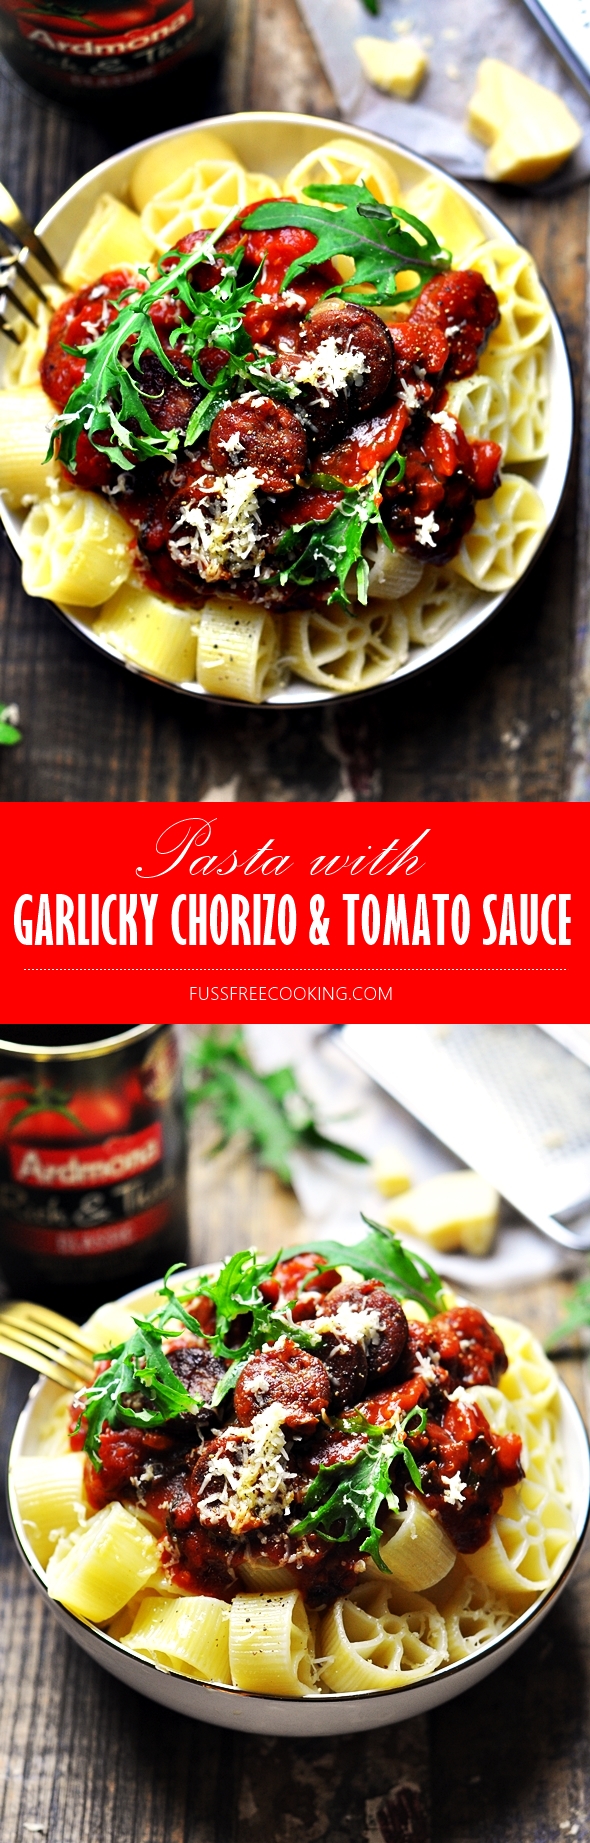 Pasta with Garlicky Chorizo & Tomato Sauce | www.fussfreecooking.com